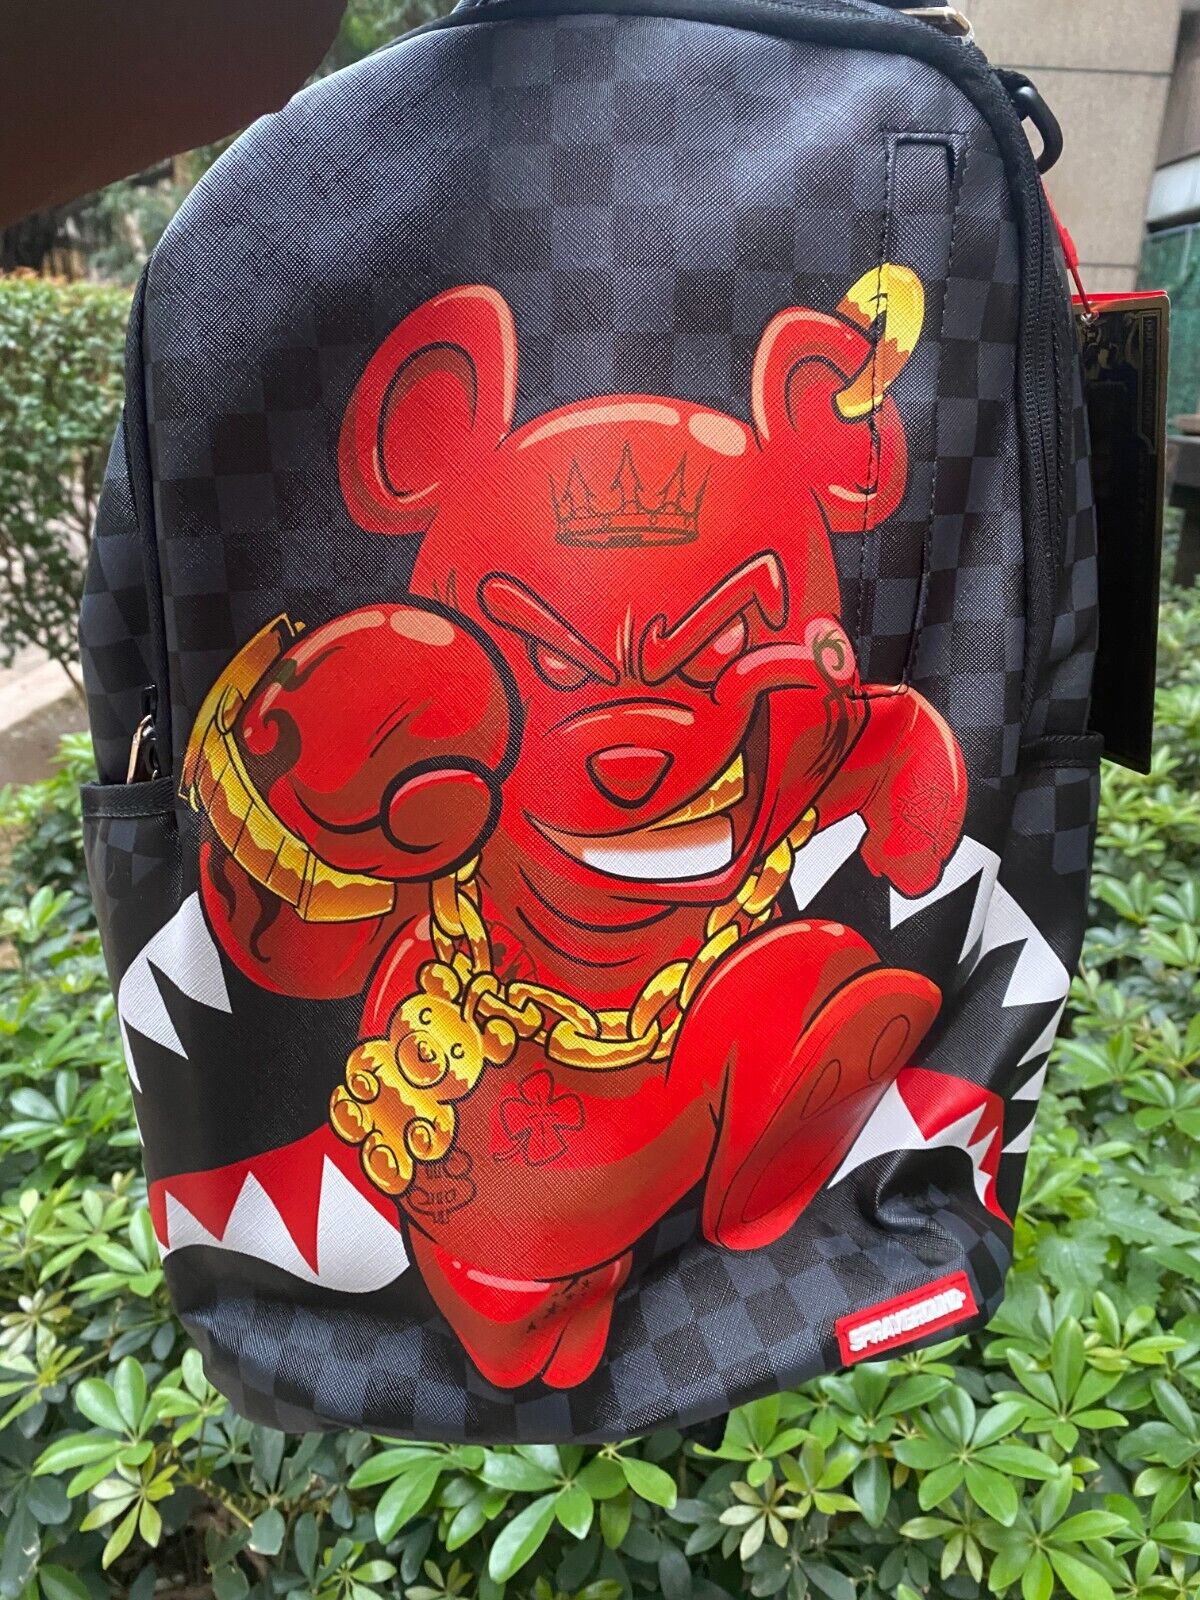 Sprayground Backpack CHASE BANK: DIABLO BACK Teddy Bear Checkered School Bag NEW